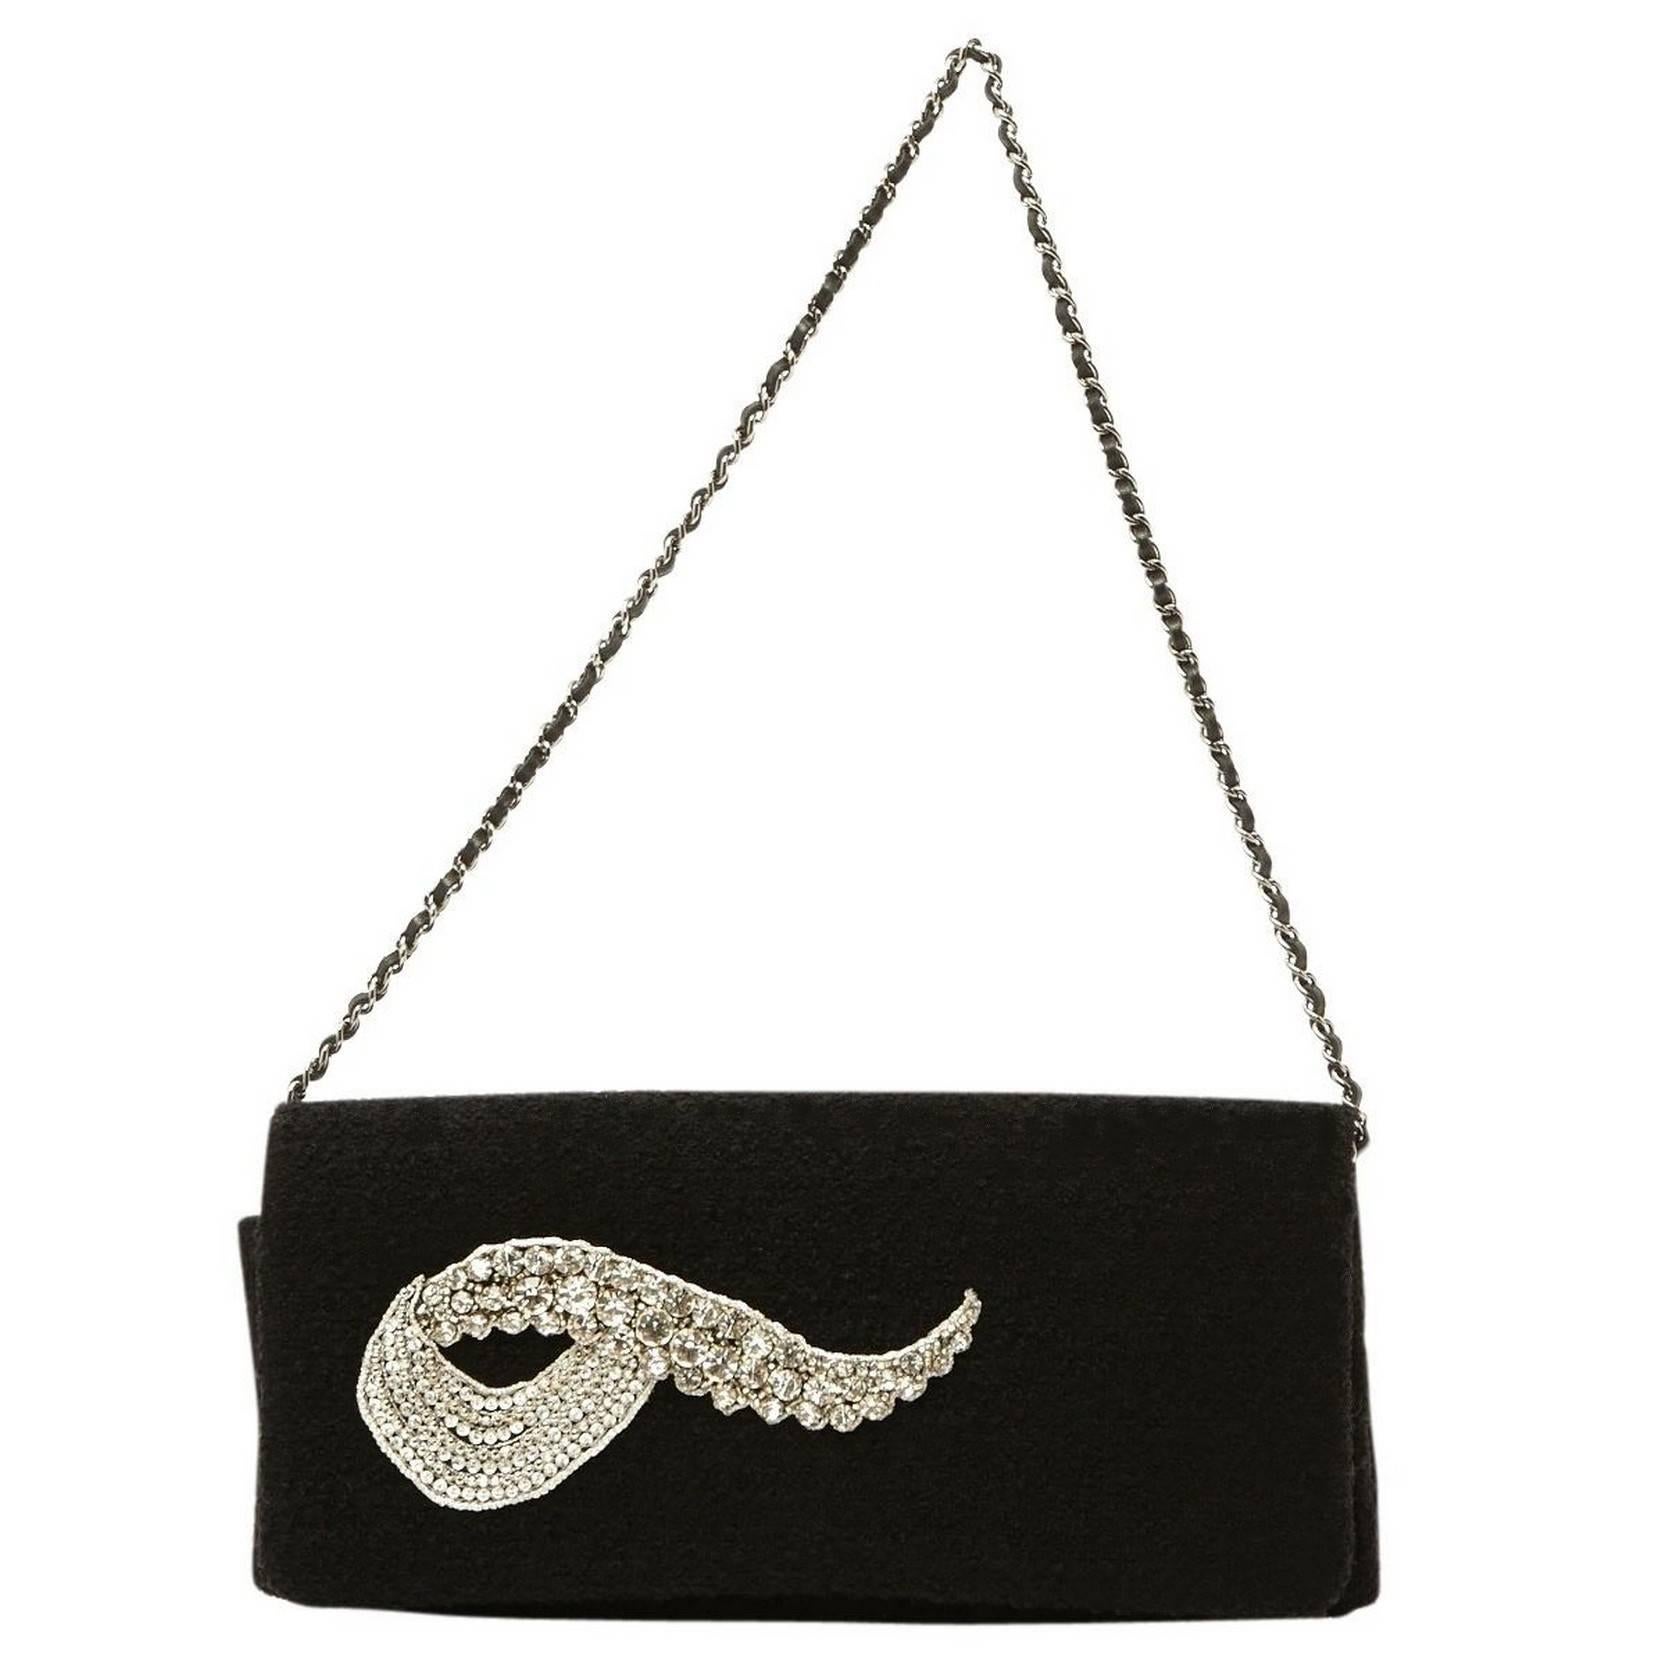 MAGNIFIC Chanel Evening Handbag
 